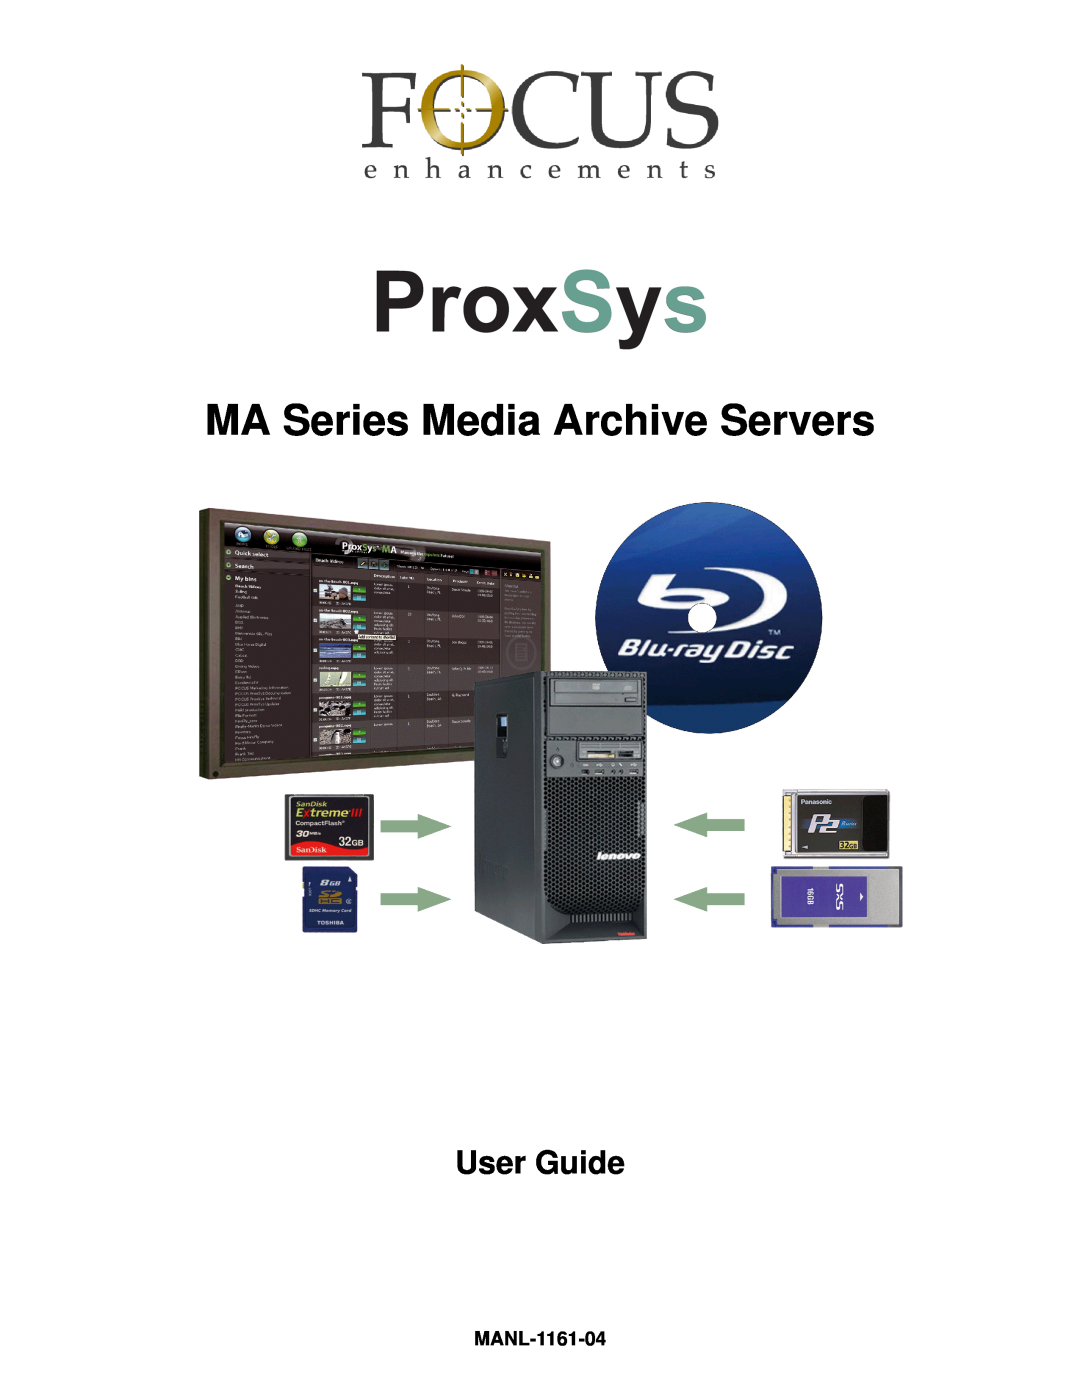 FOCUS Enhancements MANL-1161-04 manual User Guide, MA Series Media Archive Servers 